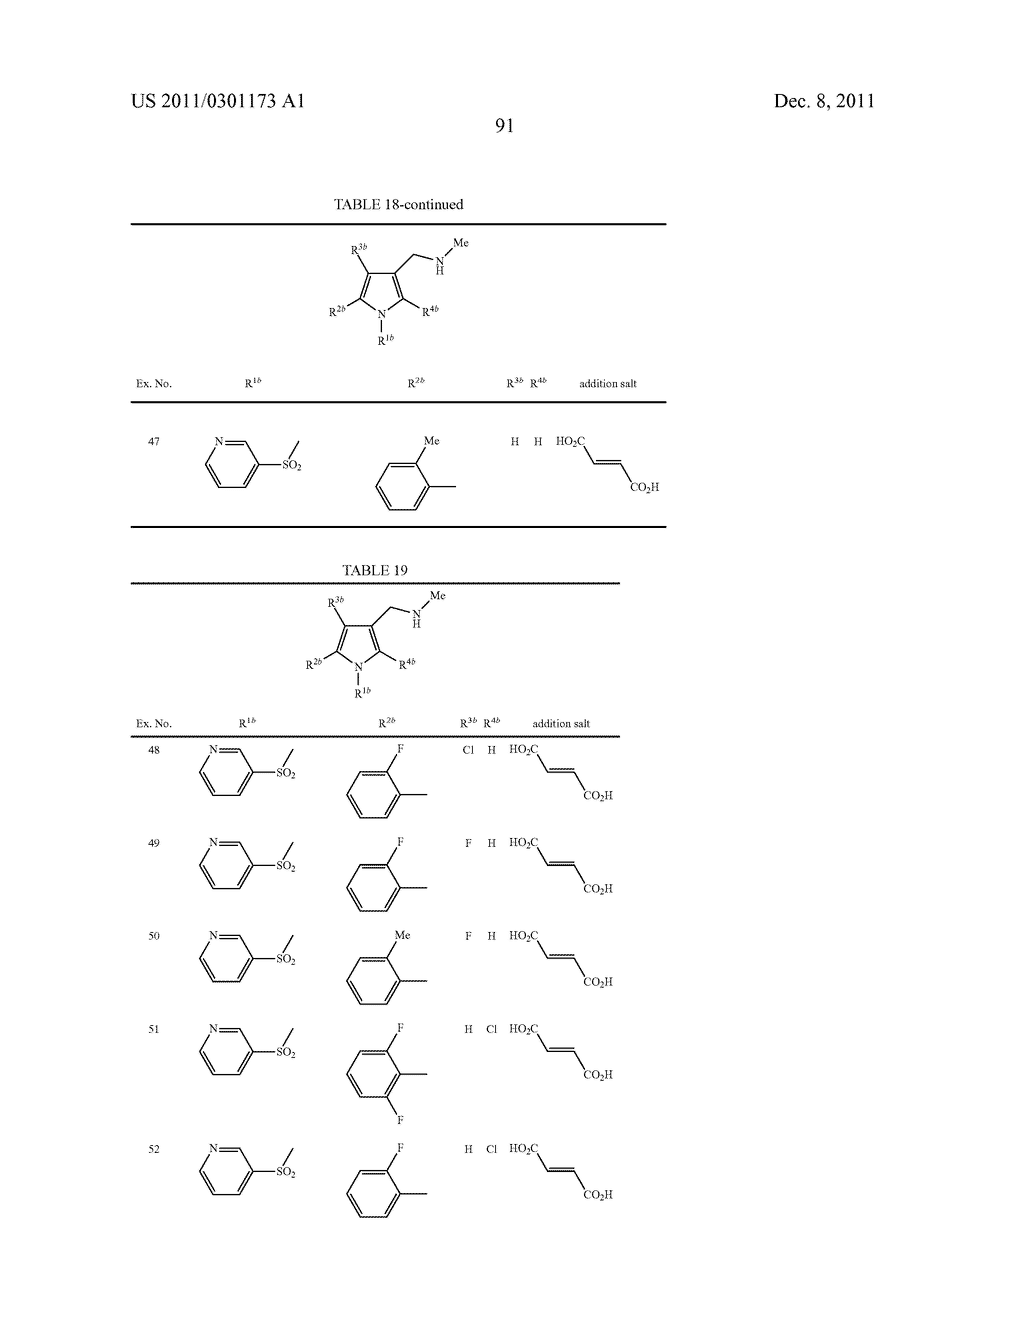 1-HETEROCYCLYLSULFONYL, 3-AMINOMETHYL, 5- (HETERO-) ARYL SUBSTITUTED     1-H-PYRROLE DERIVATIVES AS ACID SECRETION INHIBITORS - diagram, schematic, and image 92